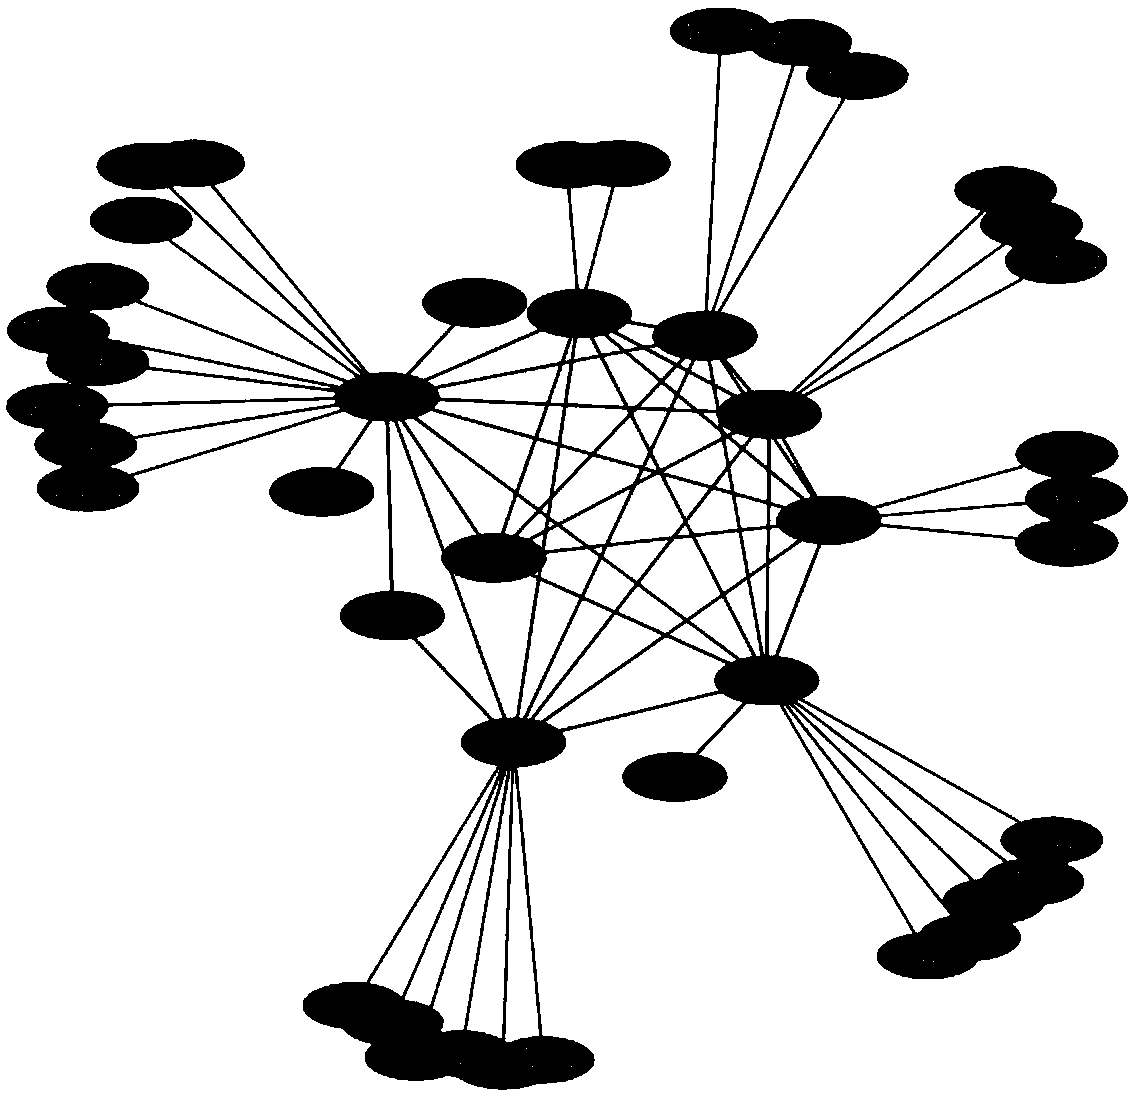 Key protein recognition method based on largest neighbor sub-network